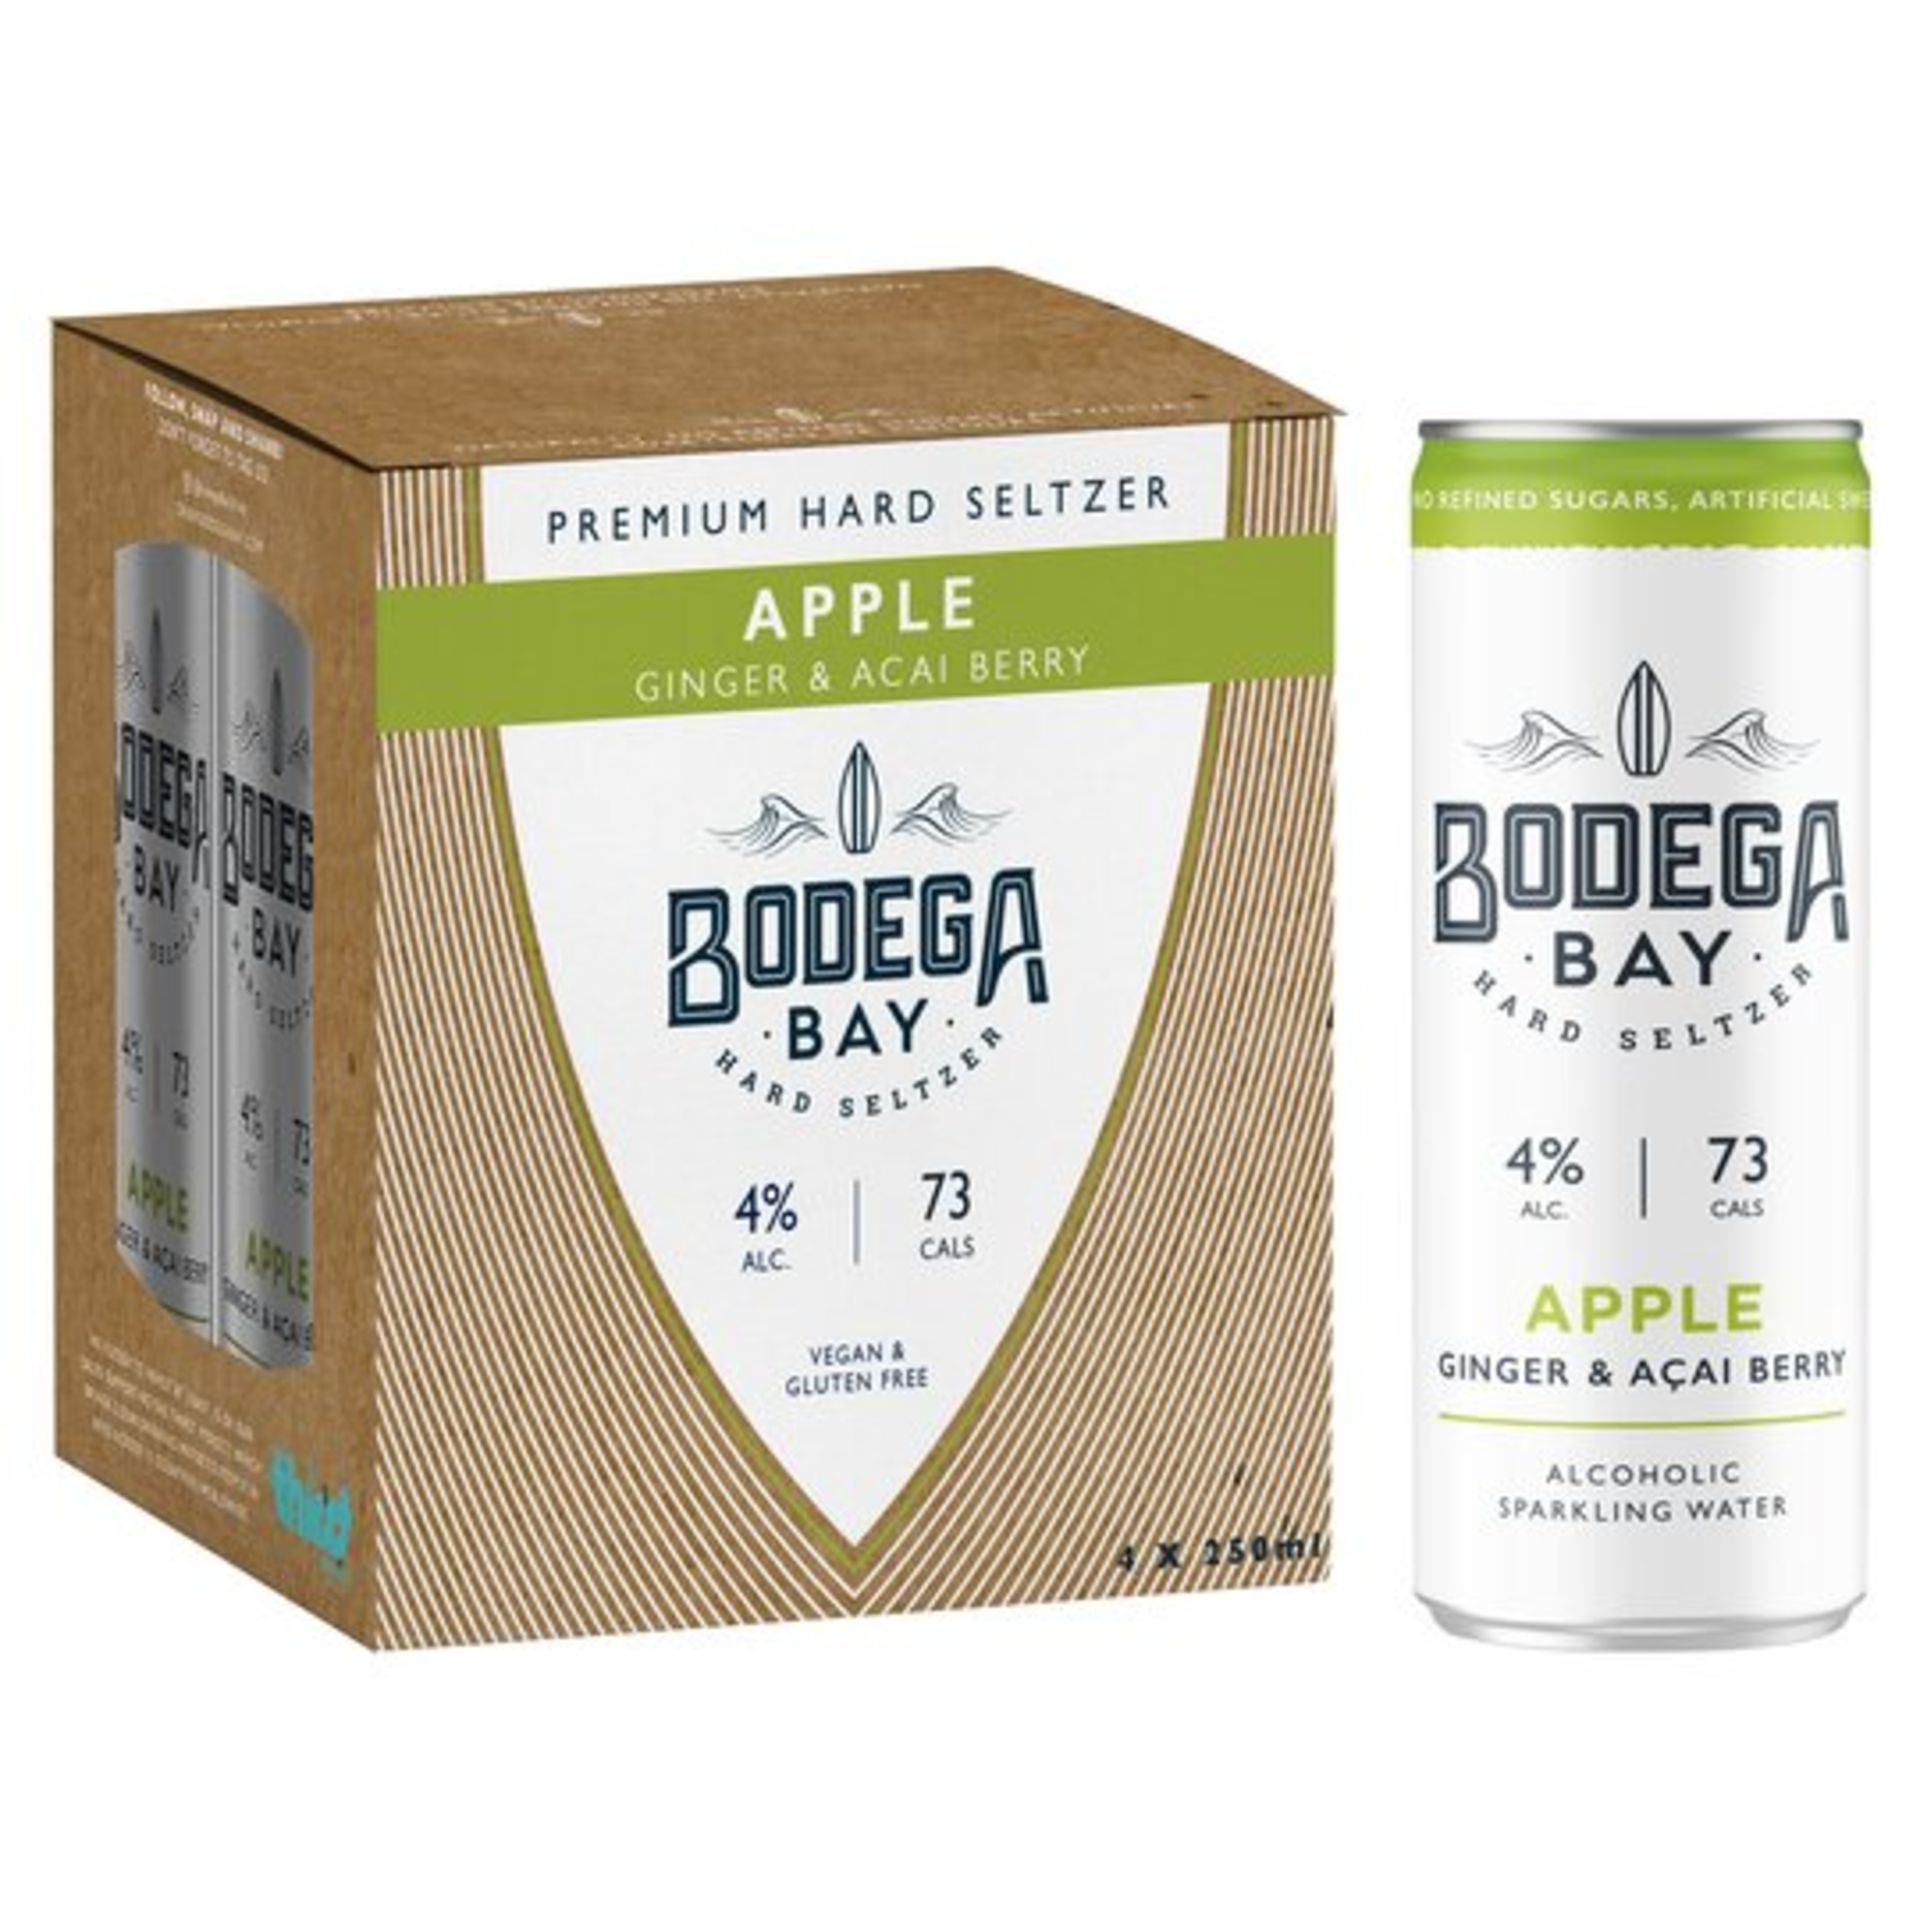 24 x Bodega Bay Hard Seltzer 250ml Alcoholic Sparkling Water Drinks - Apple Ginger & Acai Berry - Image 3 of 11